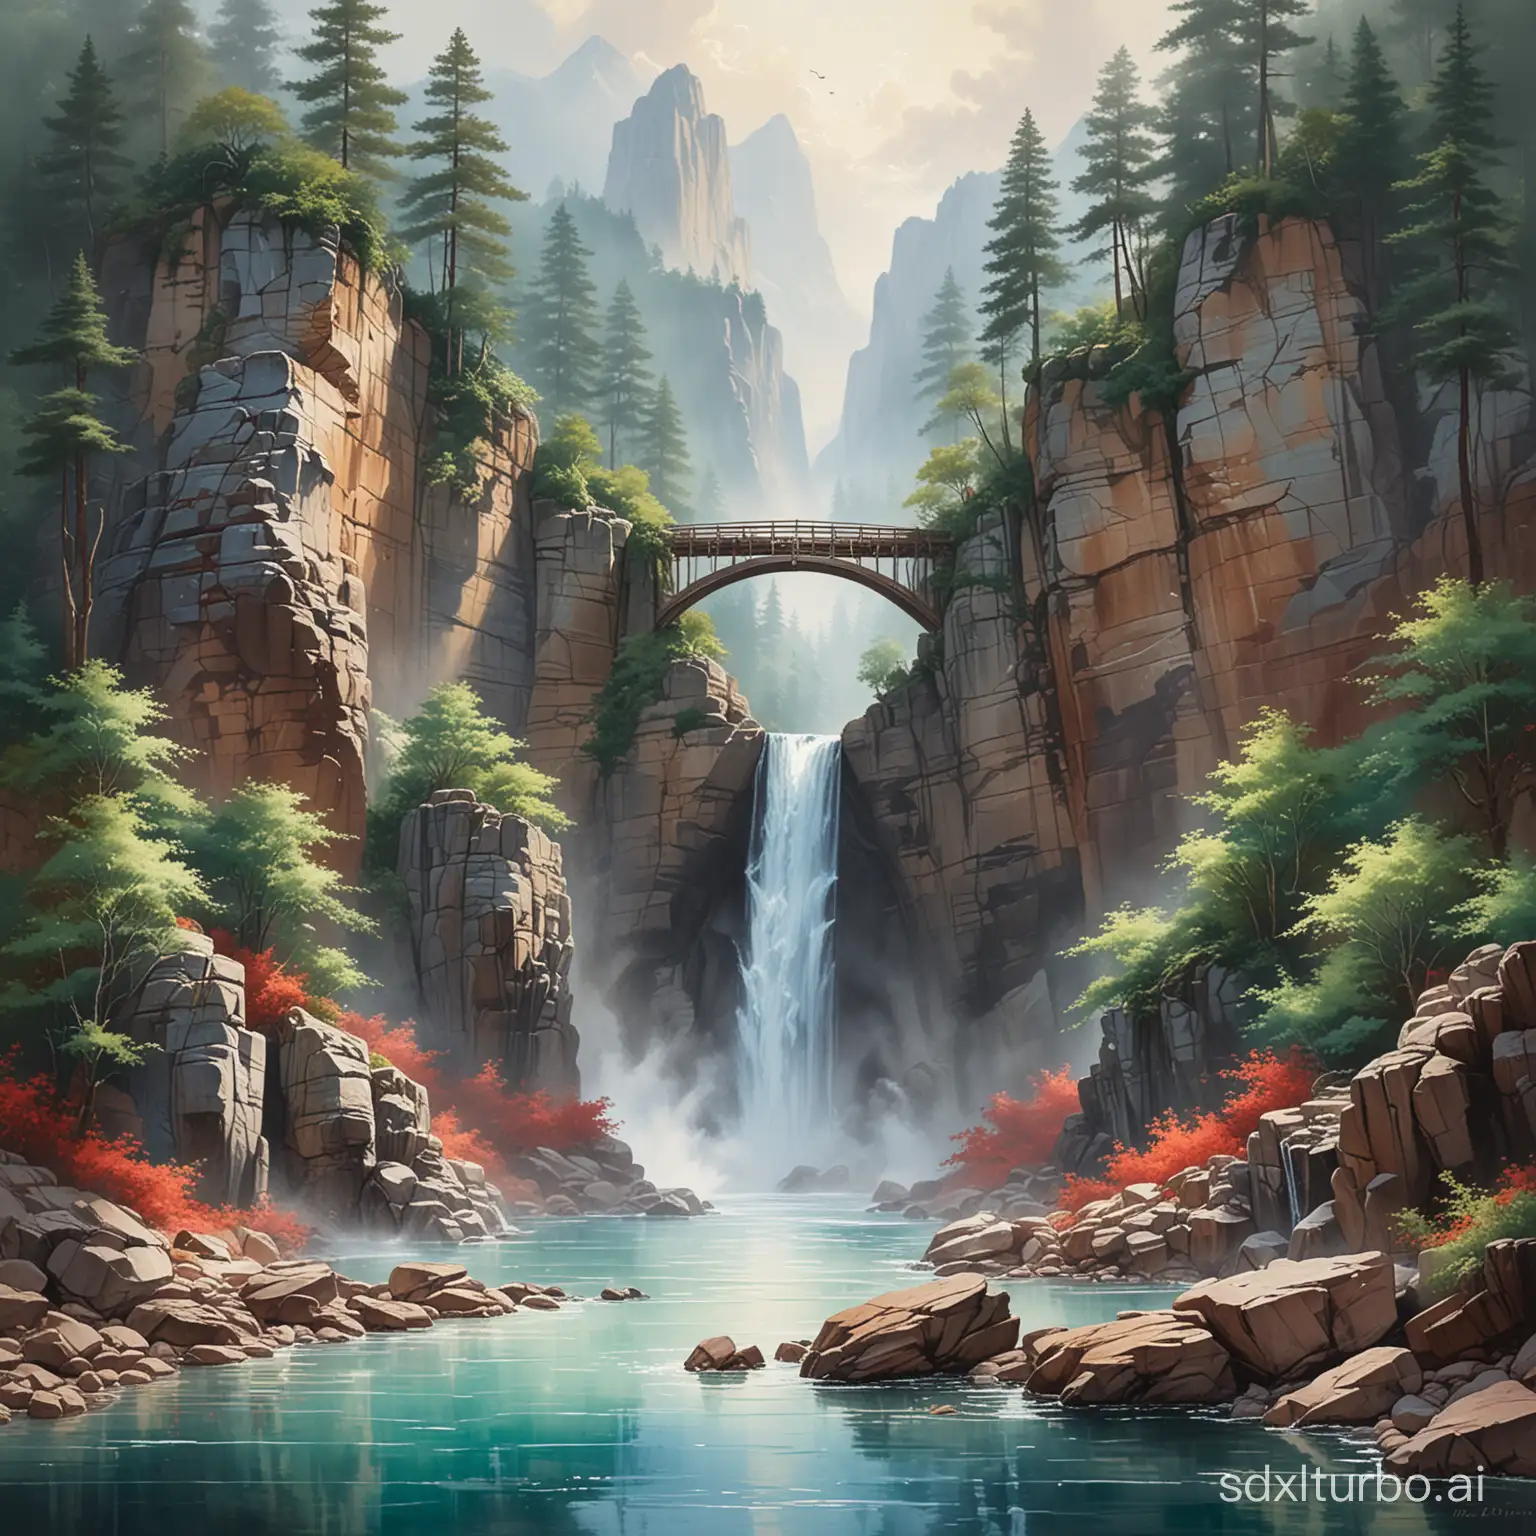 Emerald-Embrace-Majestic-Mountain-Range-and-Serene-Waterfall-Painting